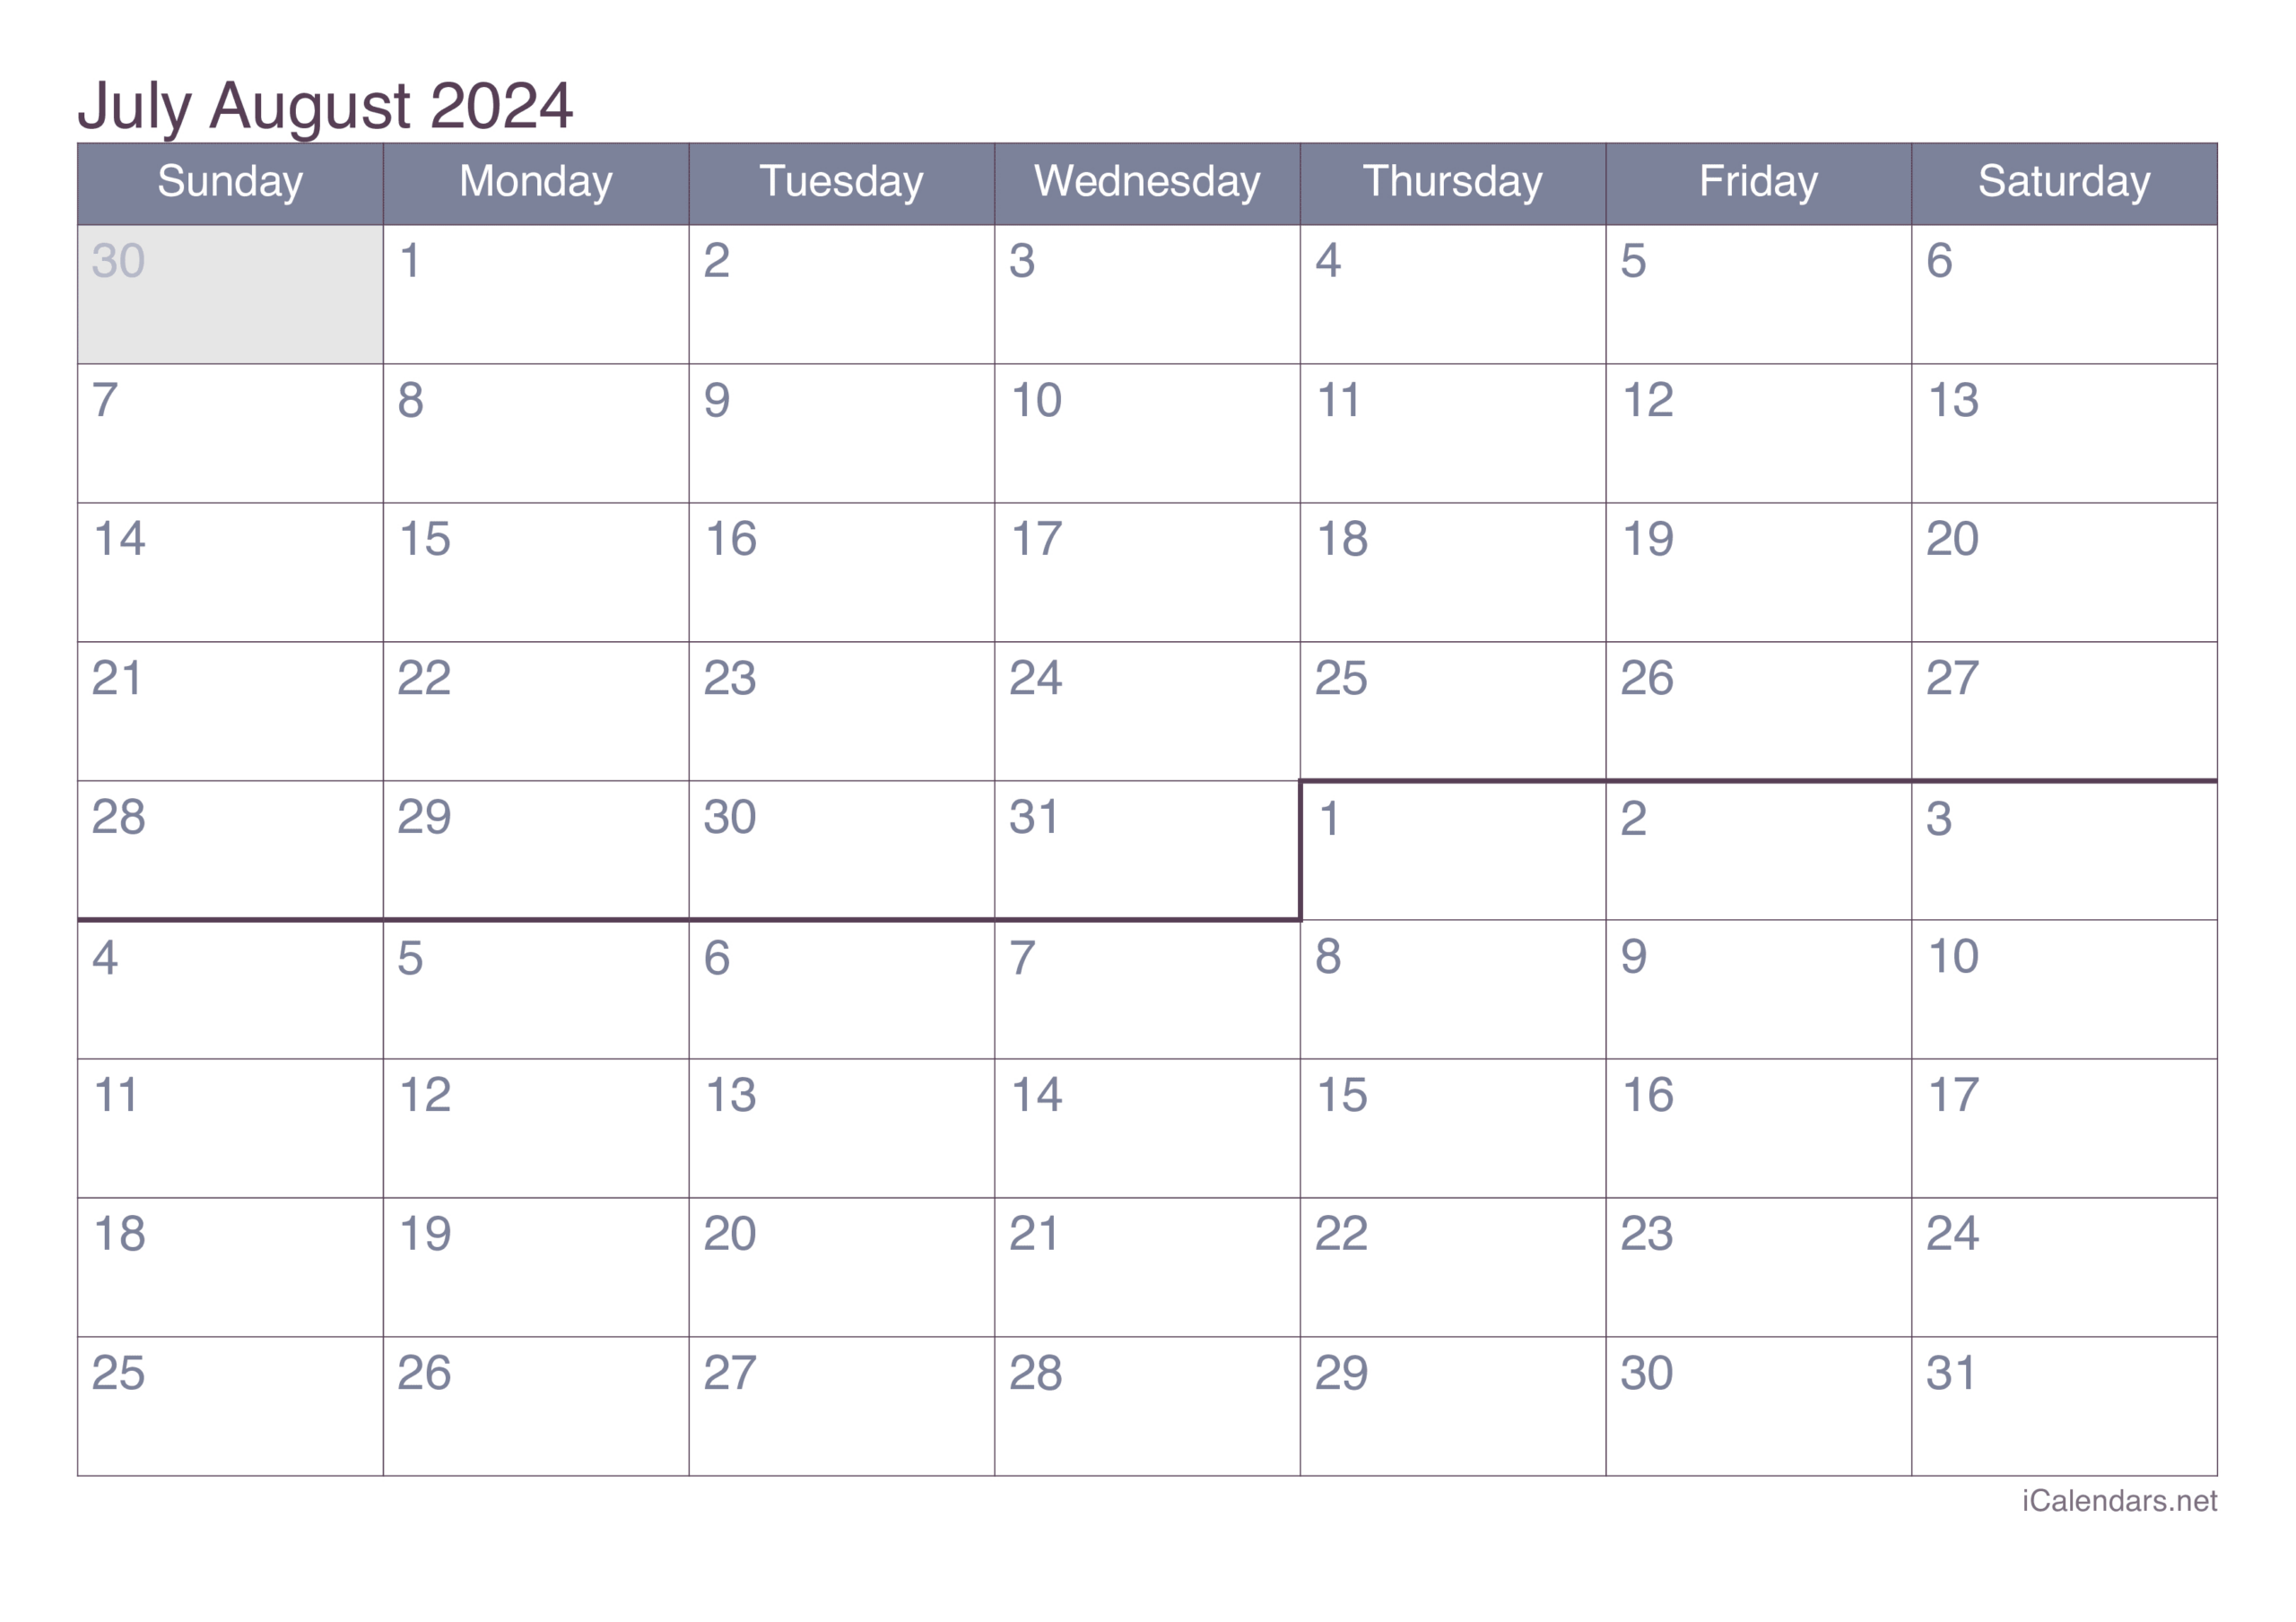 July And August 2024 Printable Calendar regarding Blank July and August 2024 Calendar